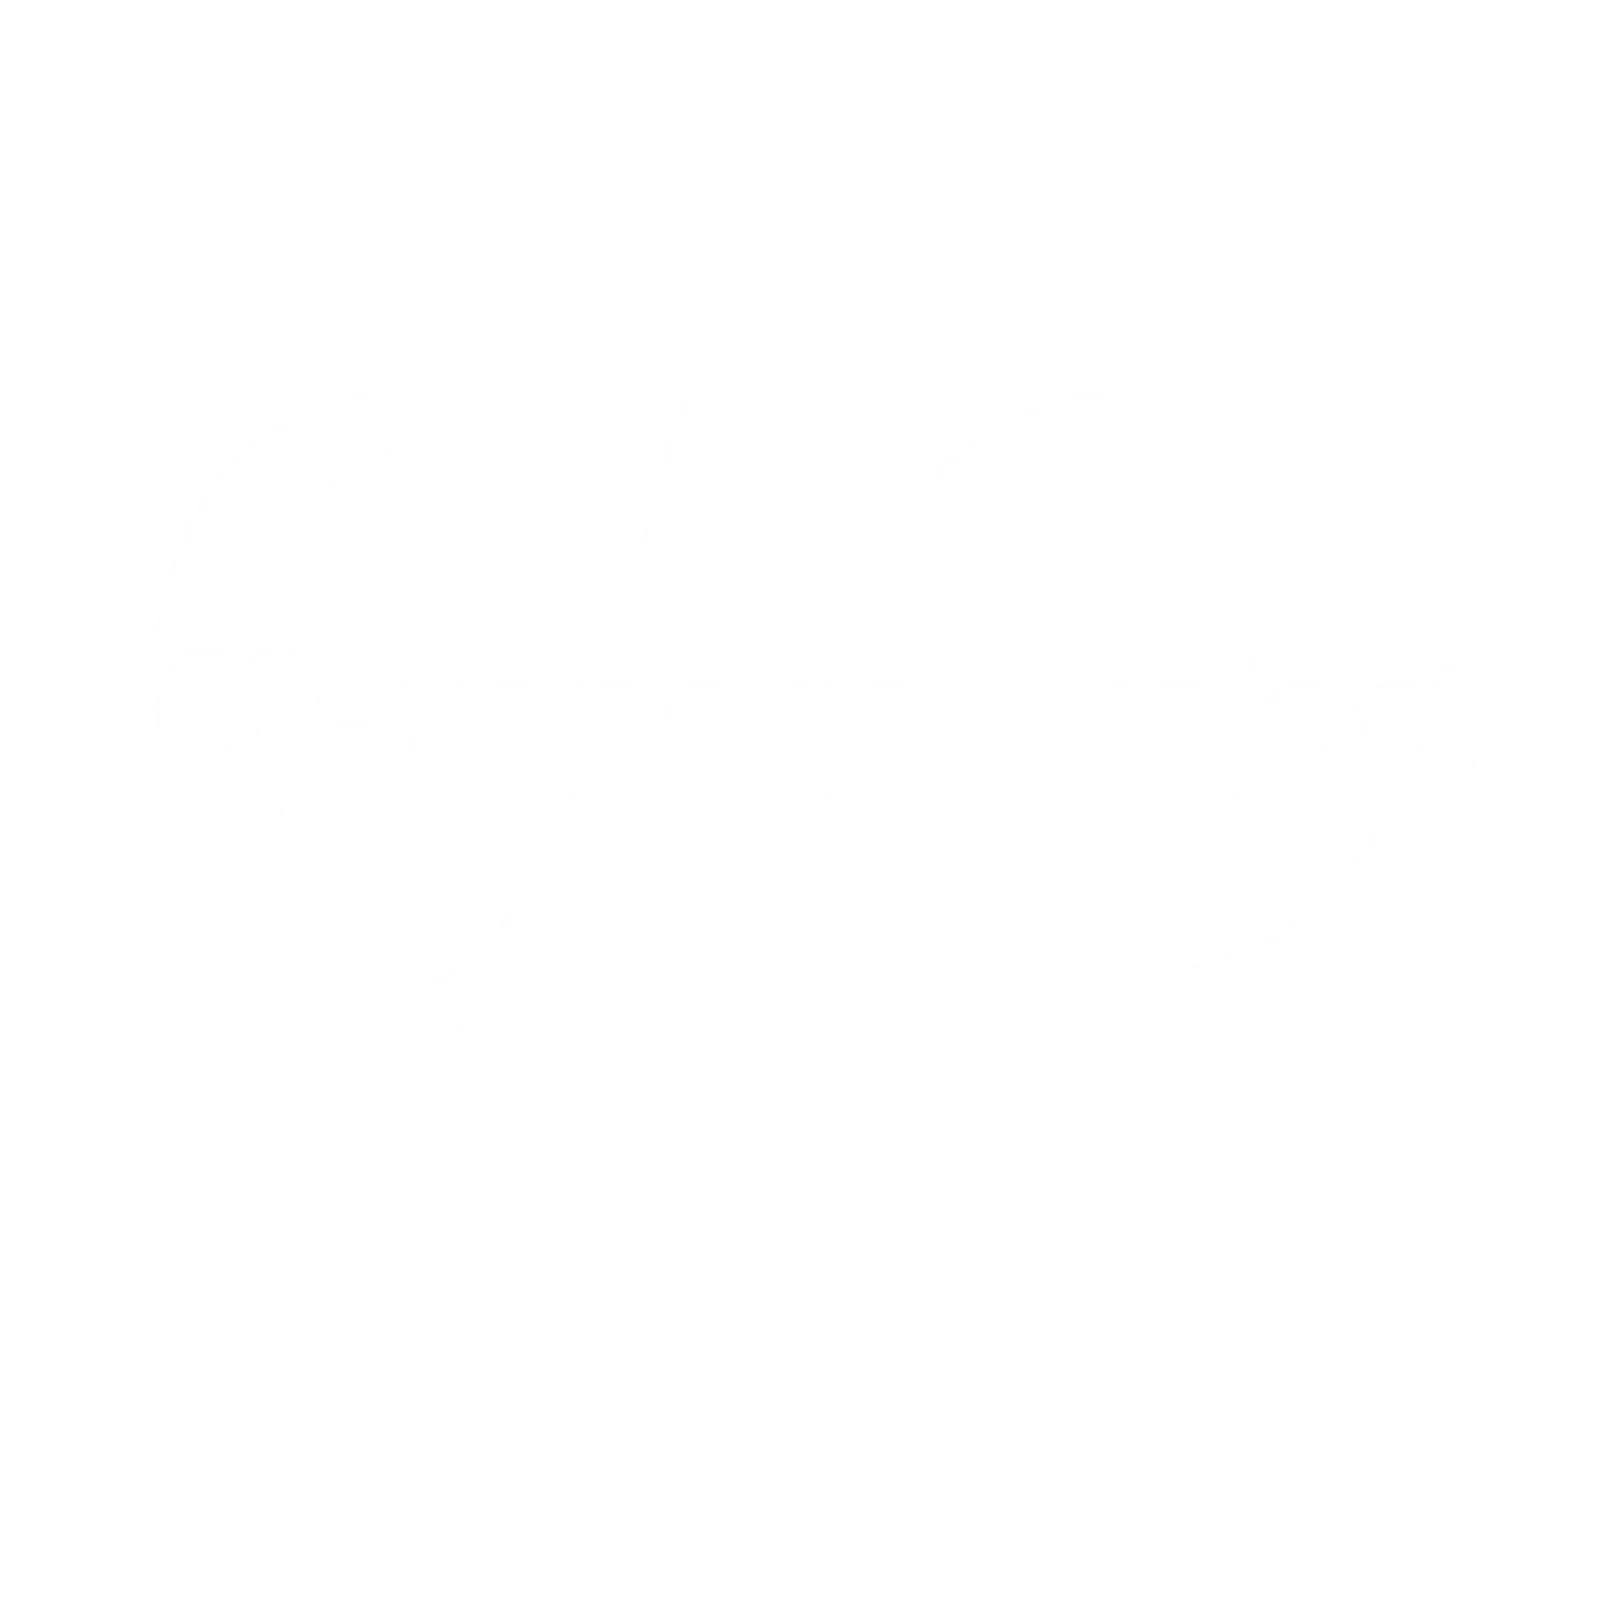 Alexandria-Project-Logo-White